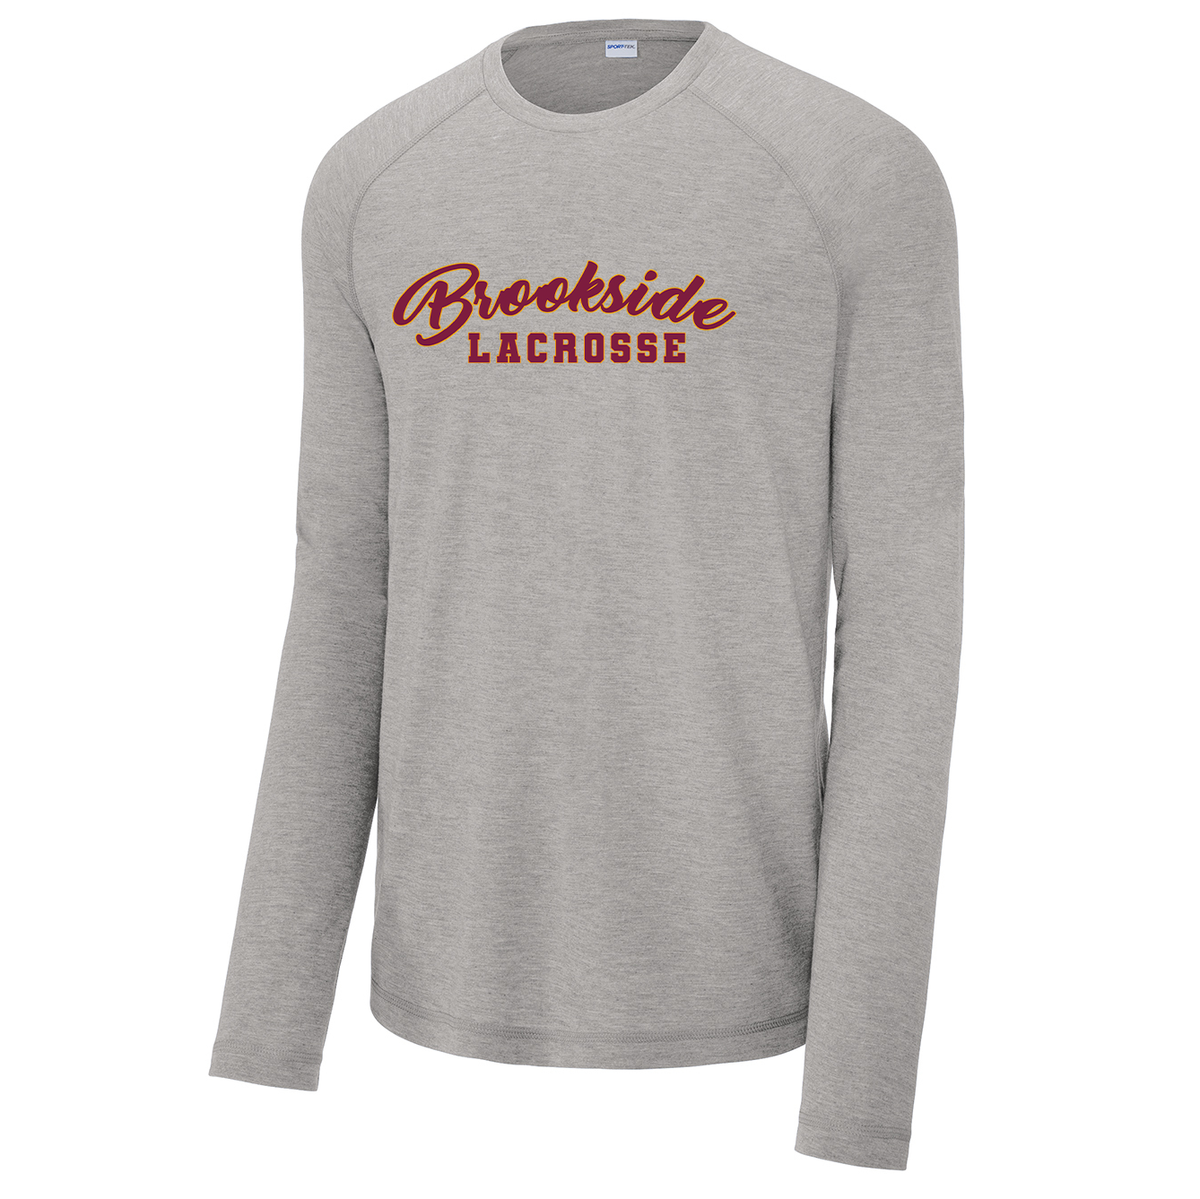 Brookside Lacrosse Long Sleeve Raglan CottonTouch